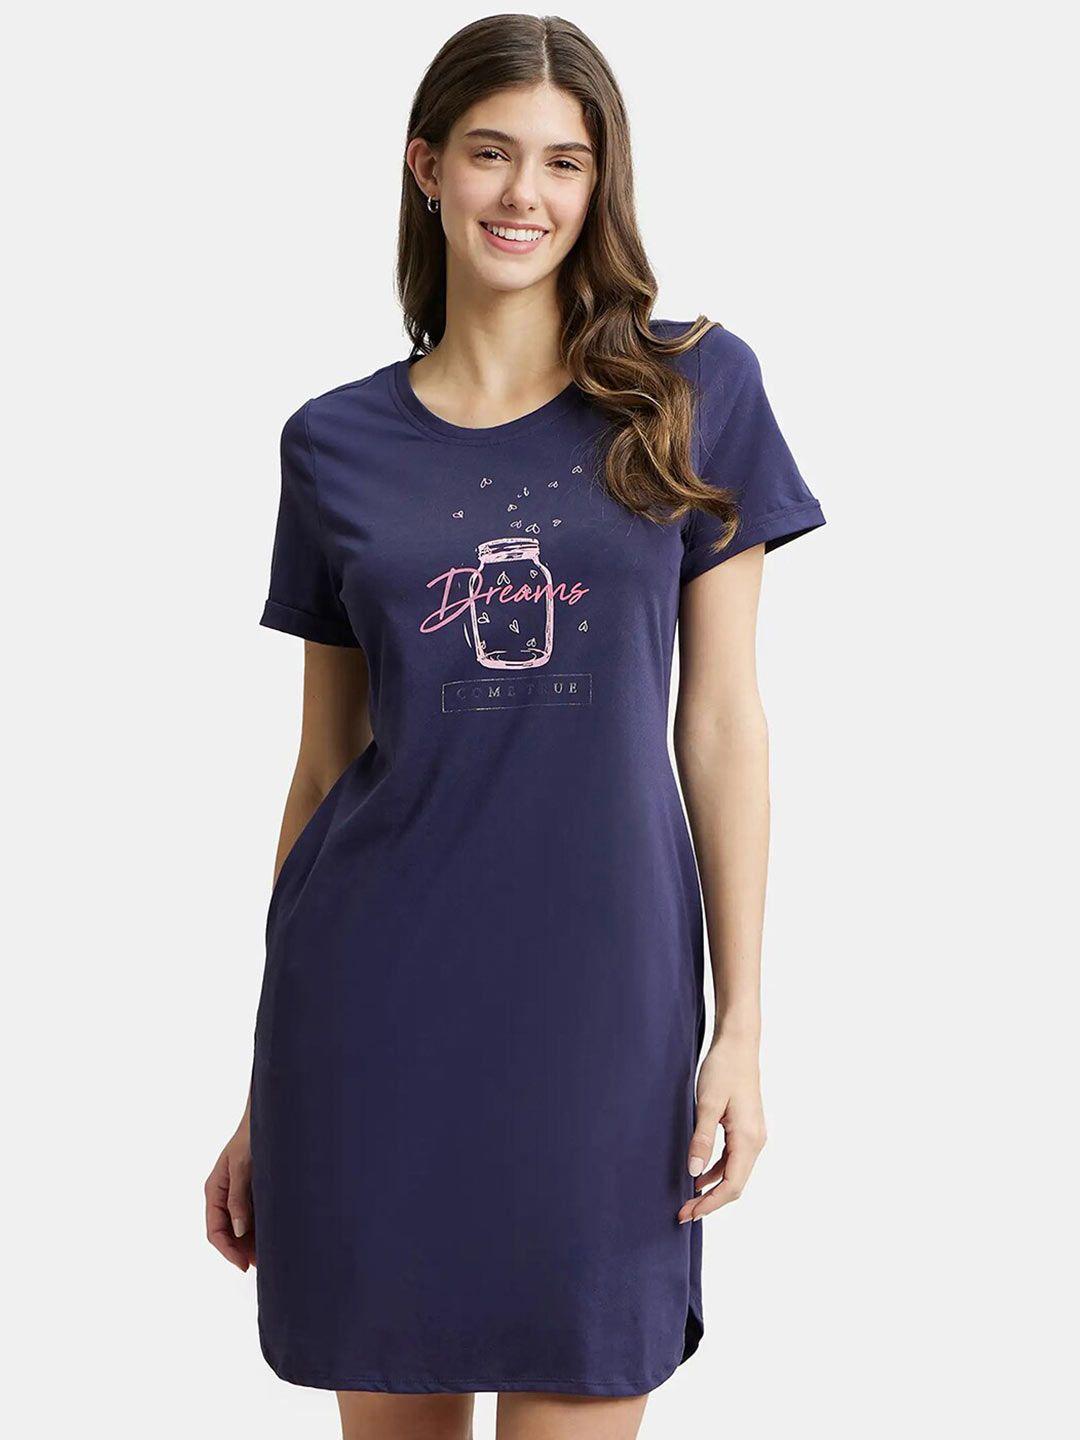 jockey graphic printed short sleeves t-shirt nightdress